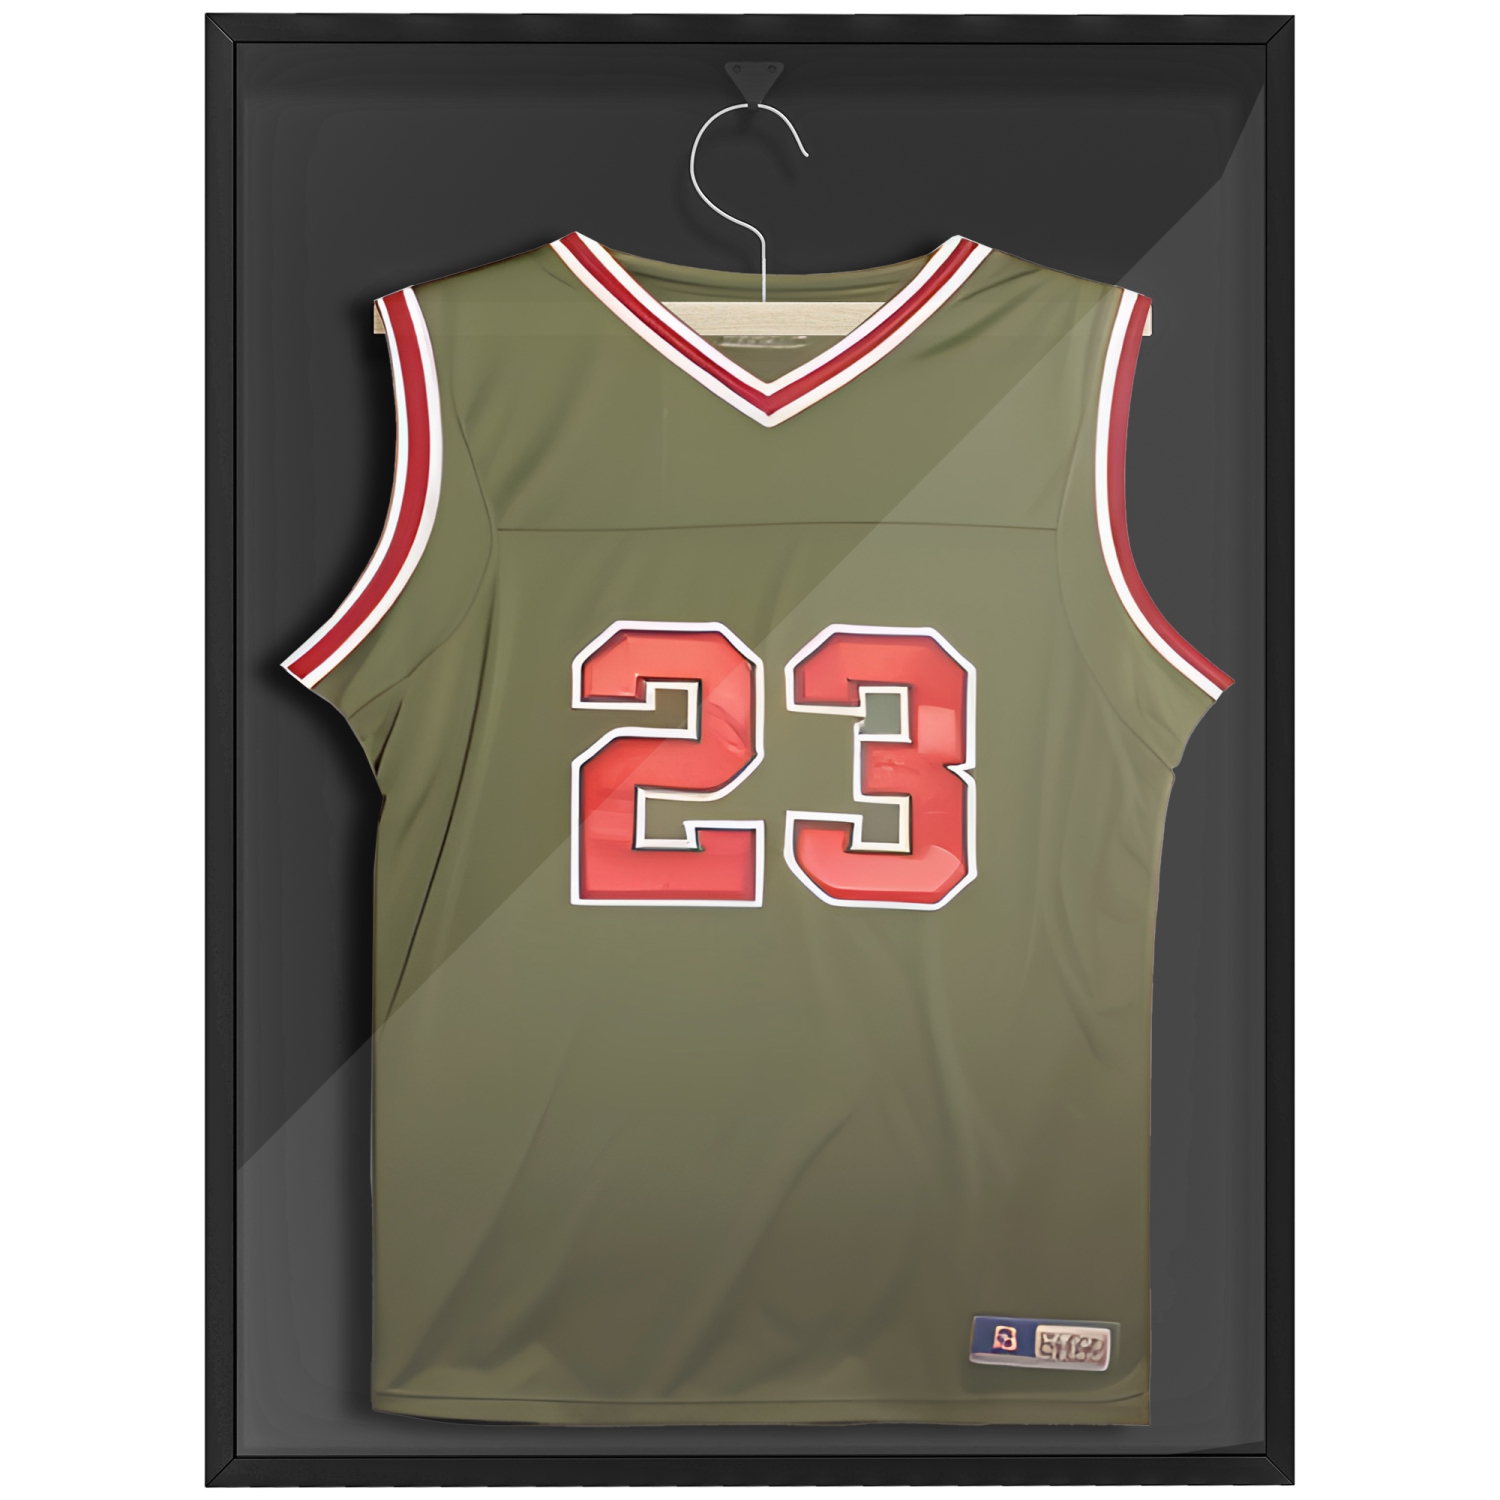 HOMCOM Jersey Display Case, Metal Jersey Frame with UV Protection, Aluminium Sports Shirt Shadow Box with Acrylic Panel for Basketball Football Baseball, 23.6" x 31.5", Black